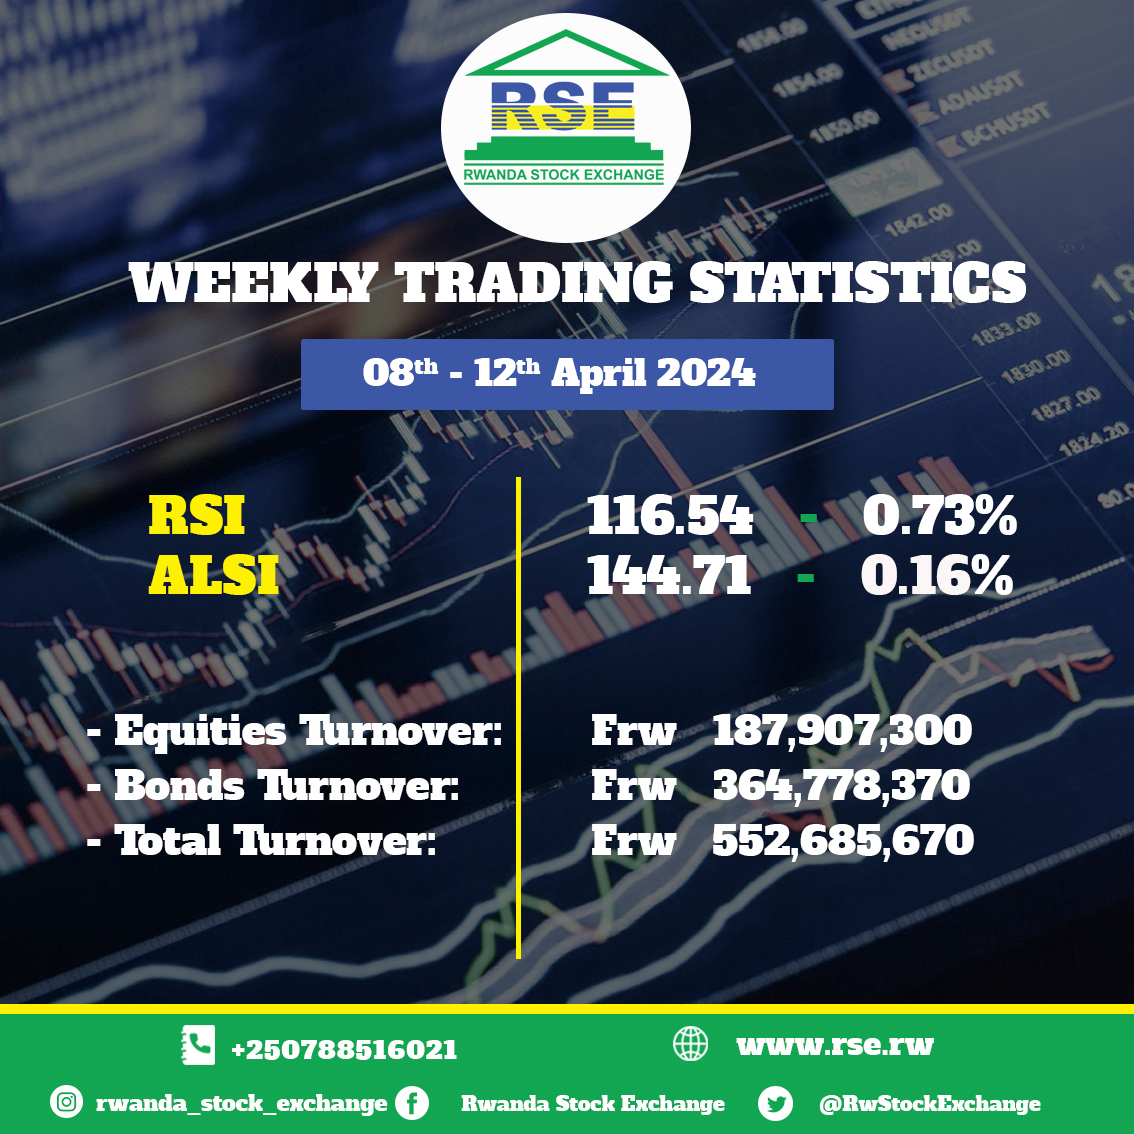 Weekly Trading Statistics! #WealthAWayOfLife